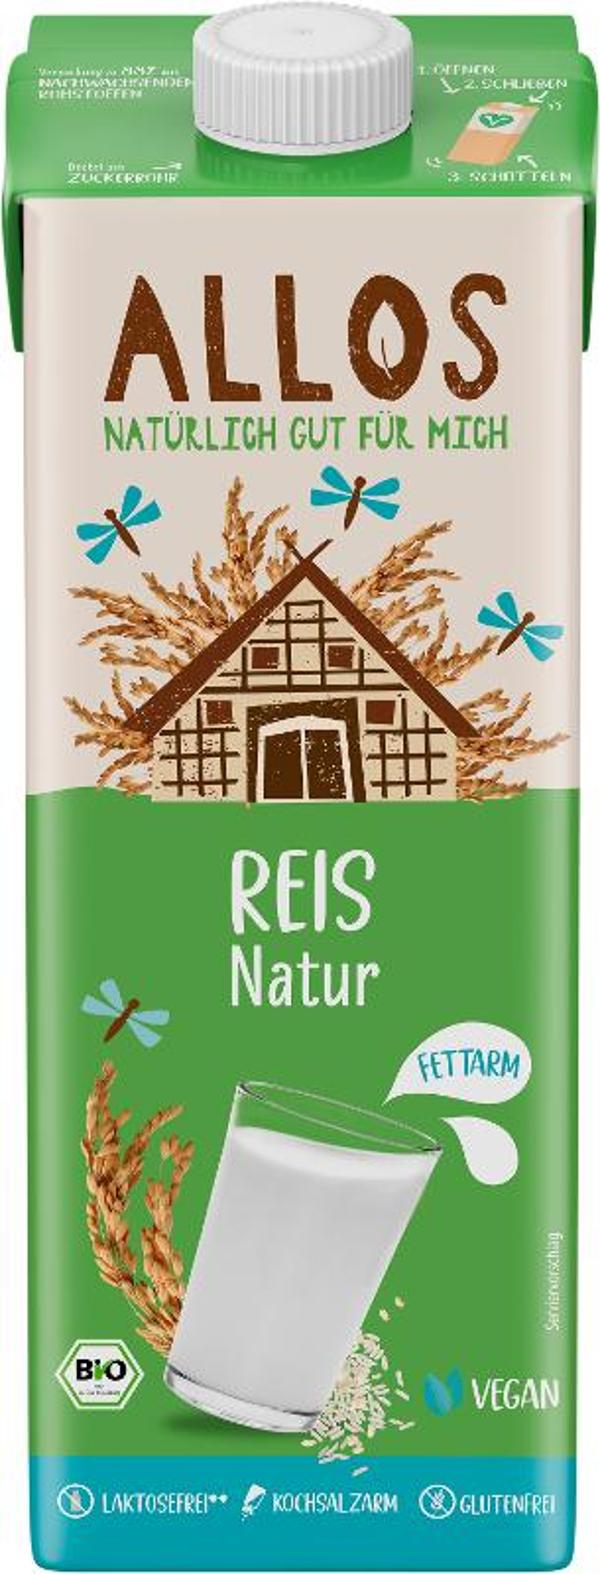 Produktfoto zu Reis Drink Naturell, 1 l